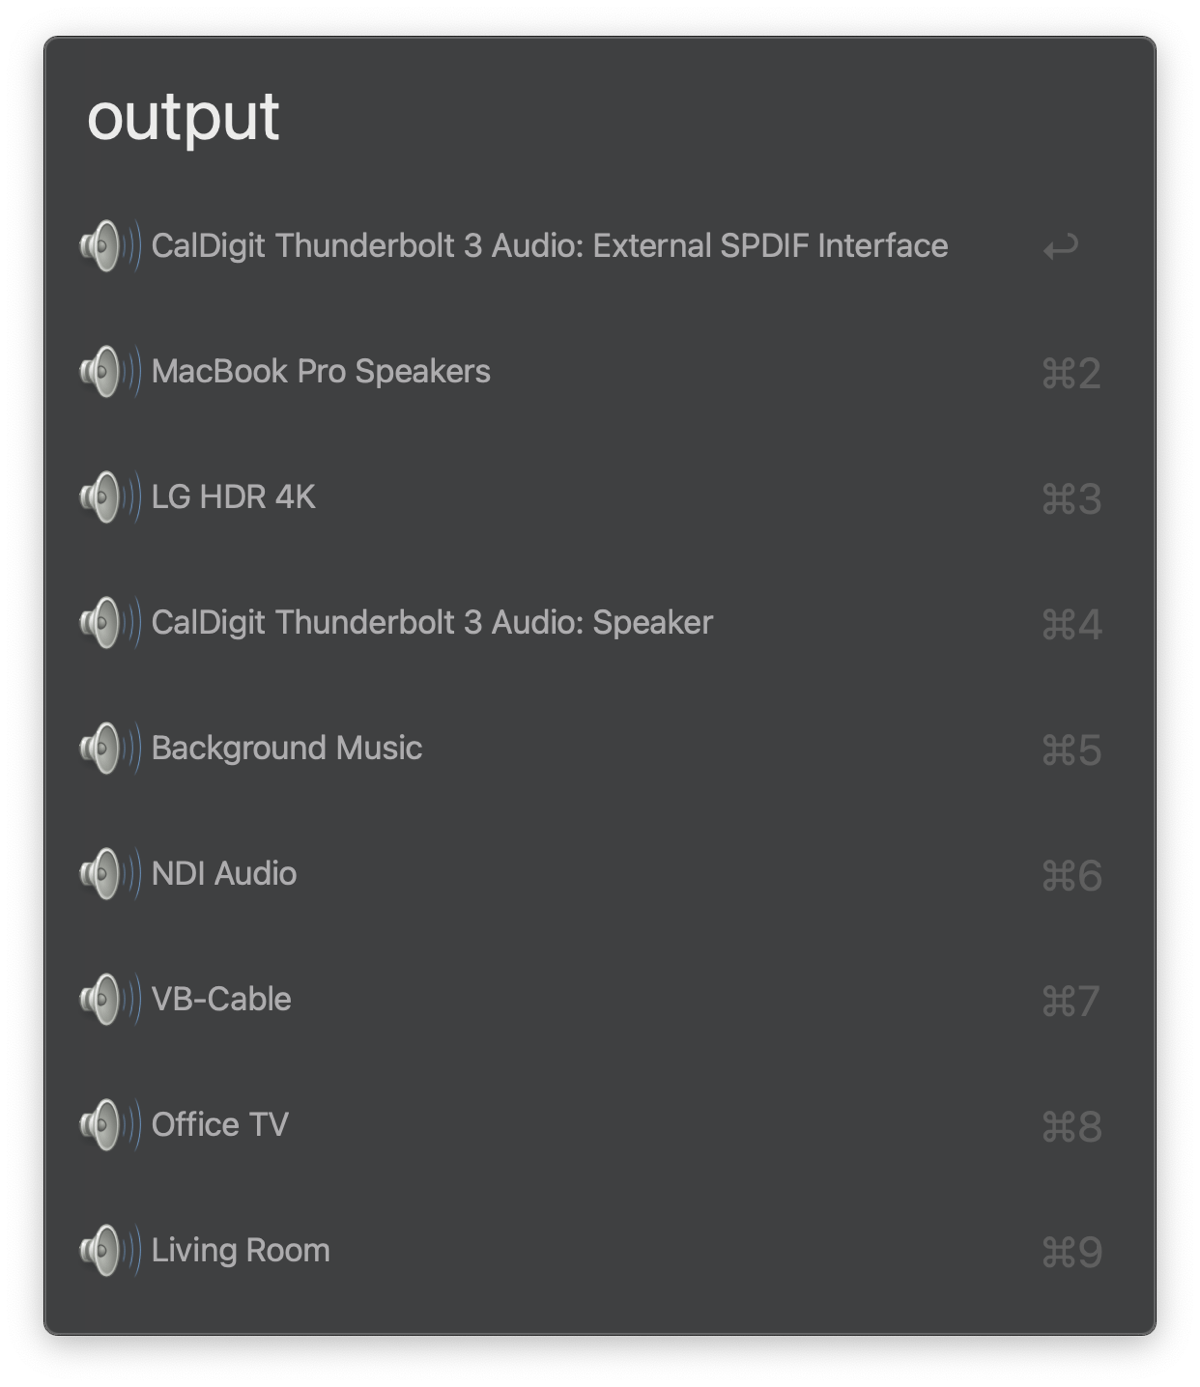 Audio output options